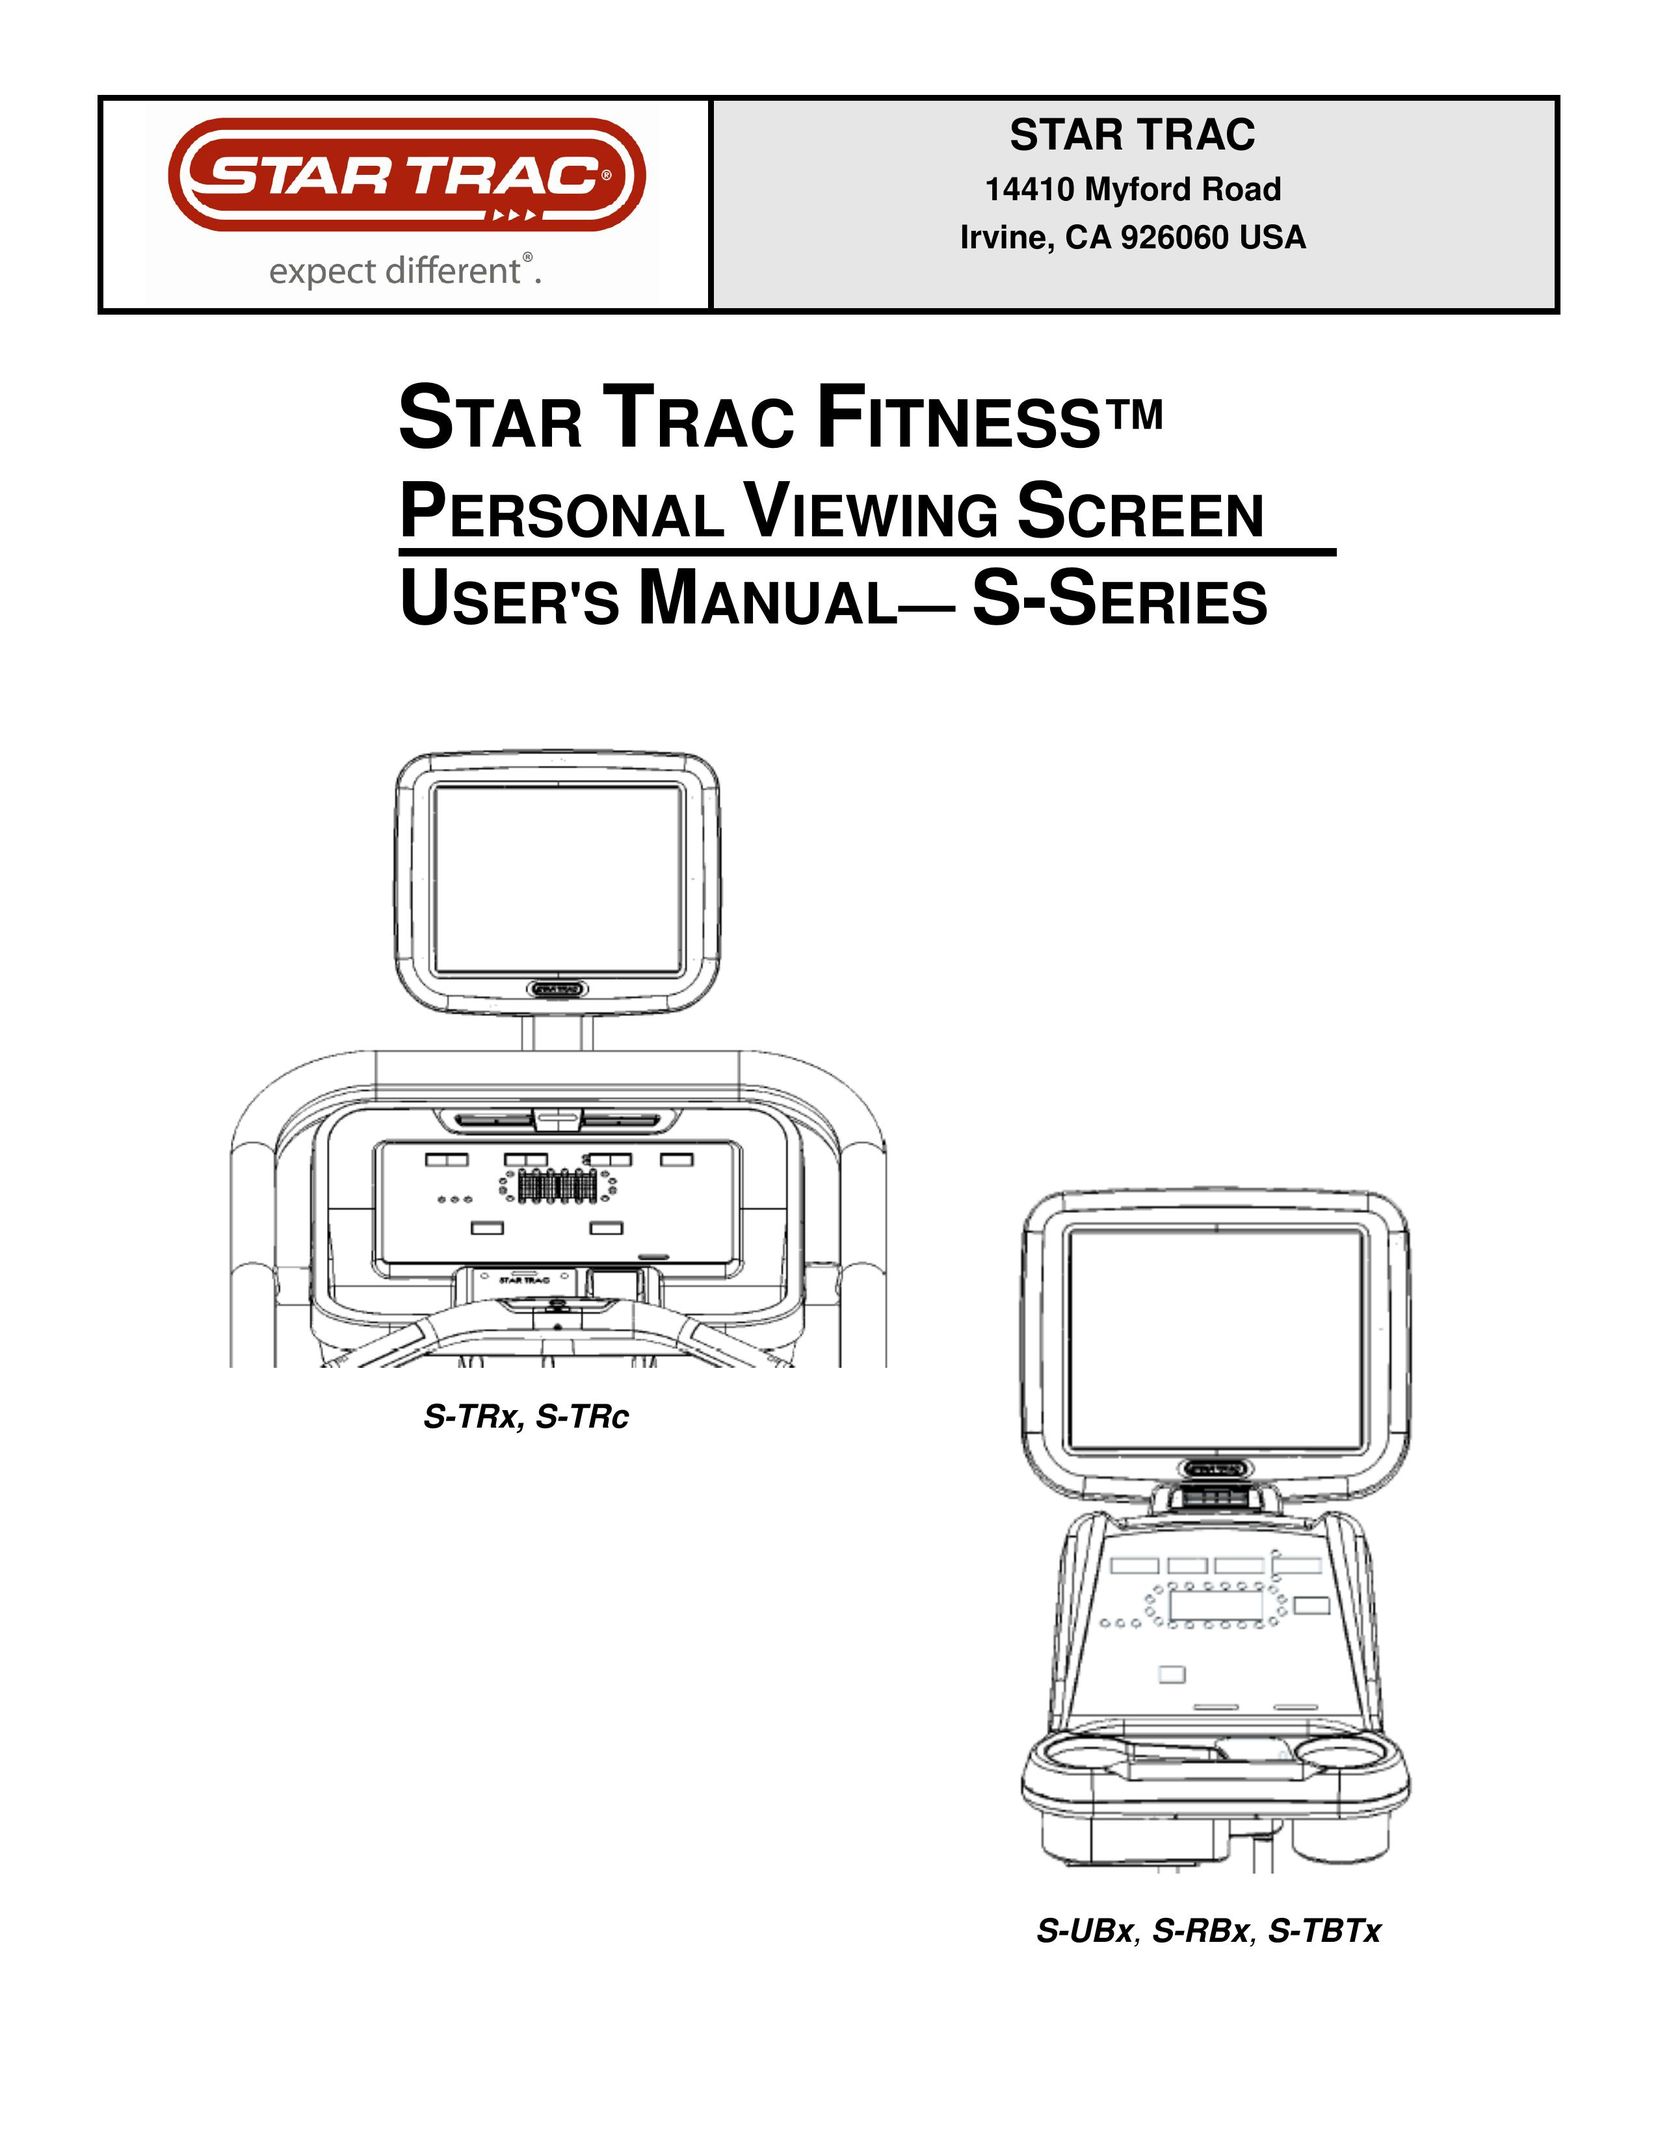 Star Trac S-UBX Fitness Electronics User Manual